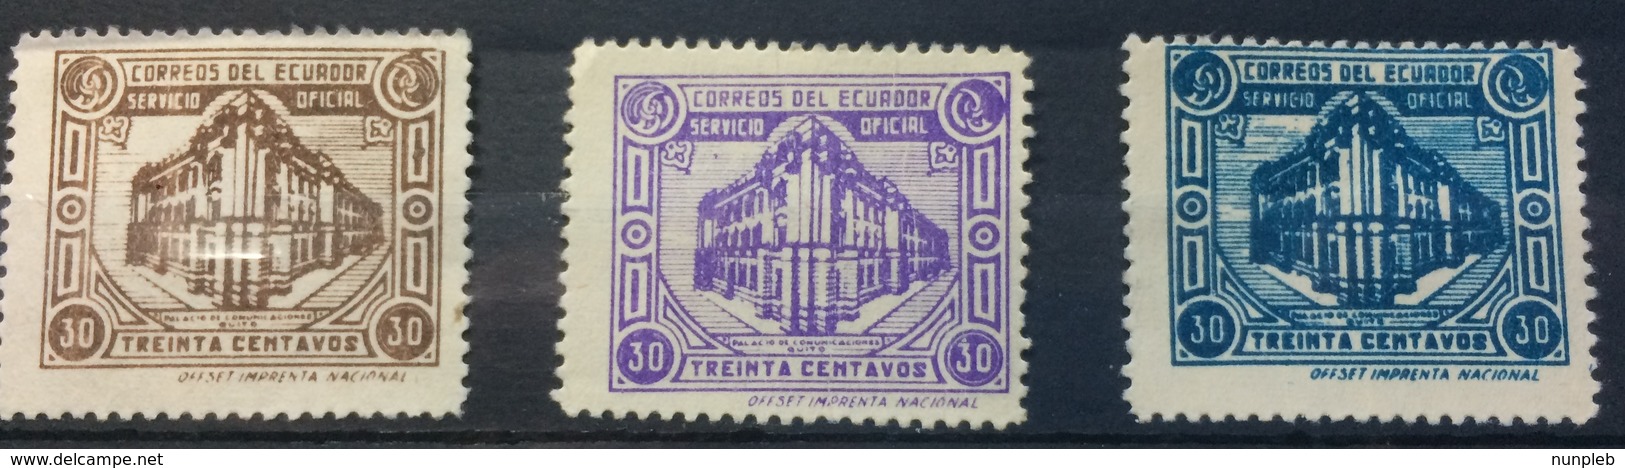 Ecuador 1947 Tobacco Tax Stamps Unused Set - Ecuador